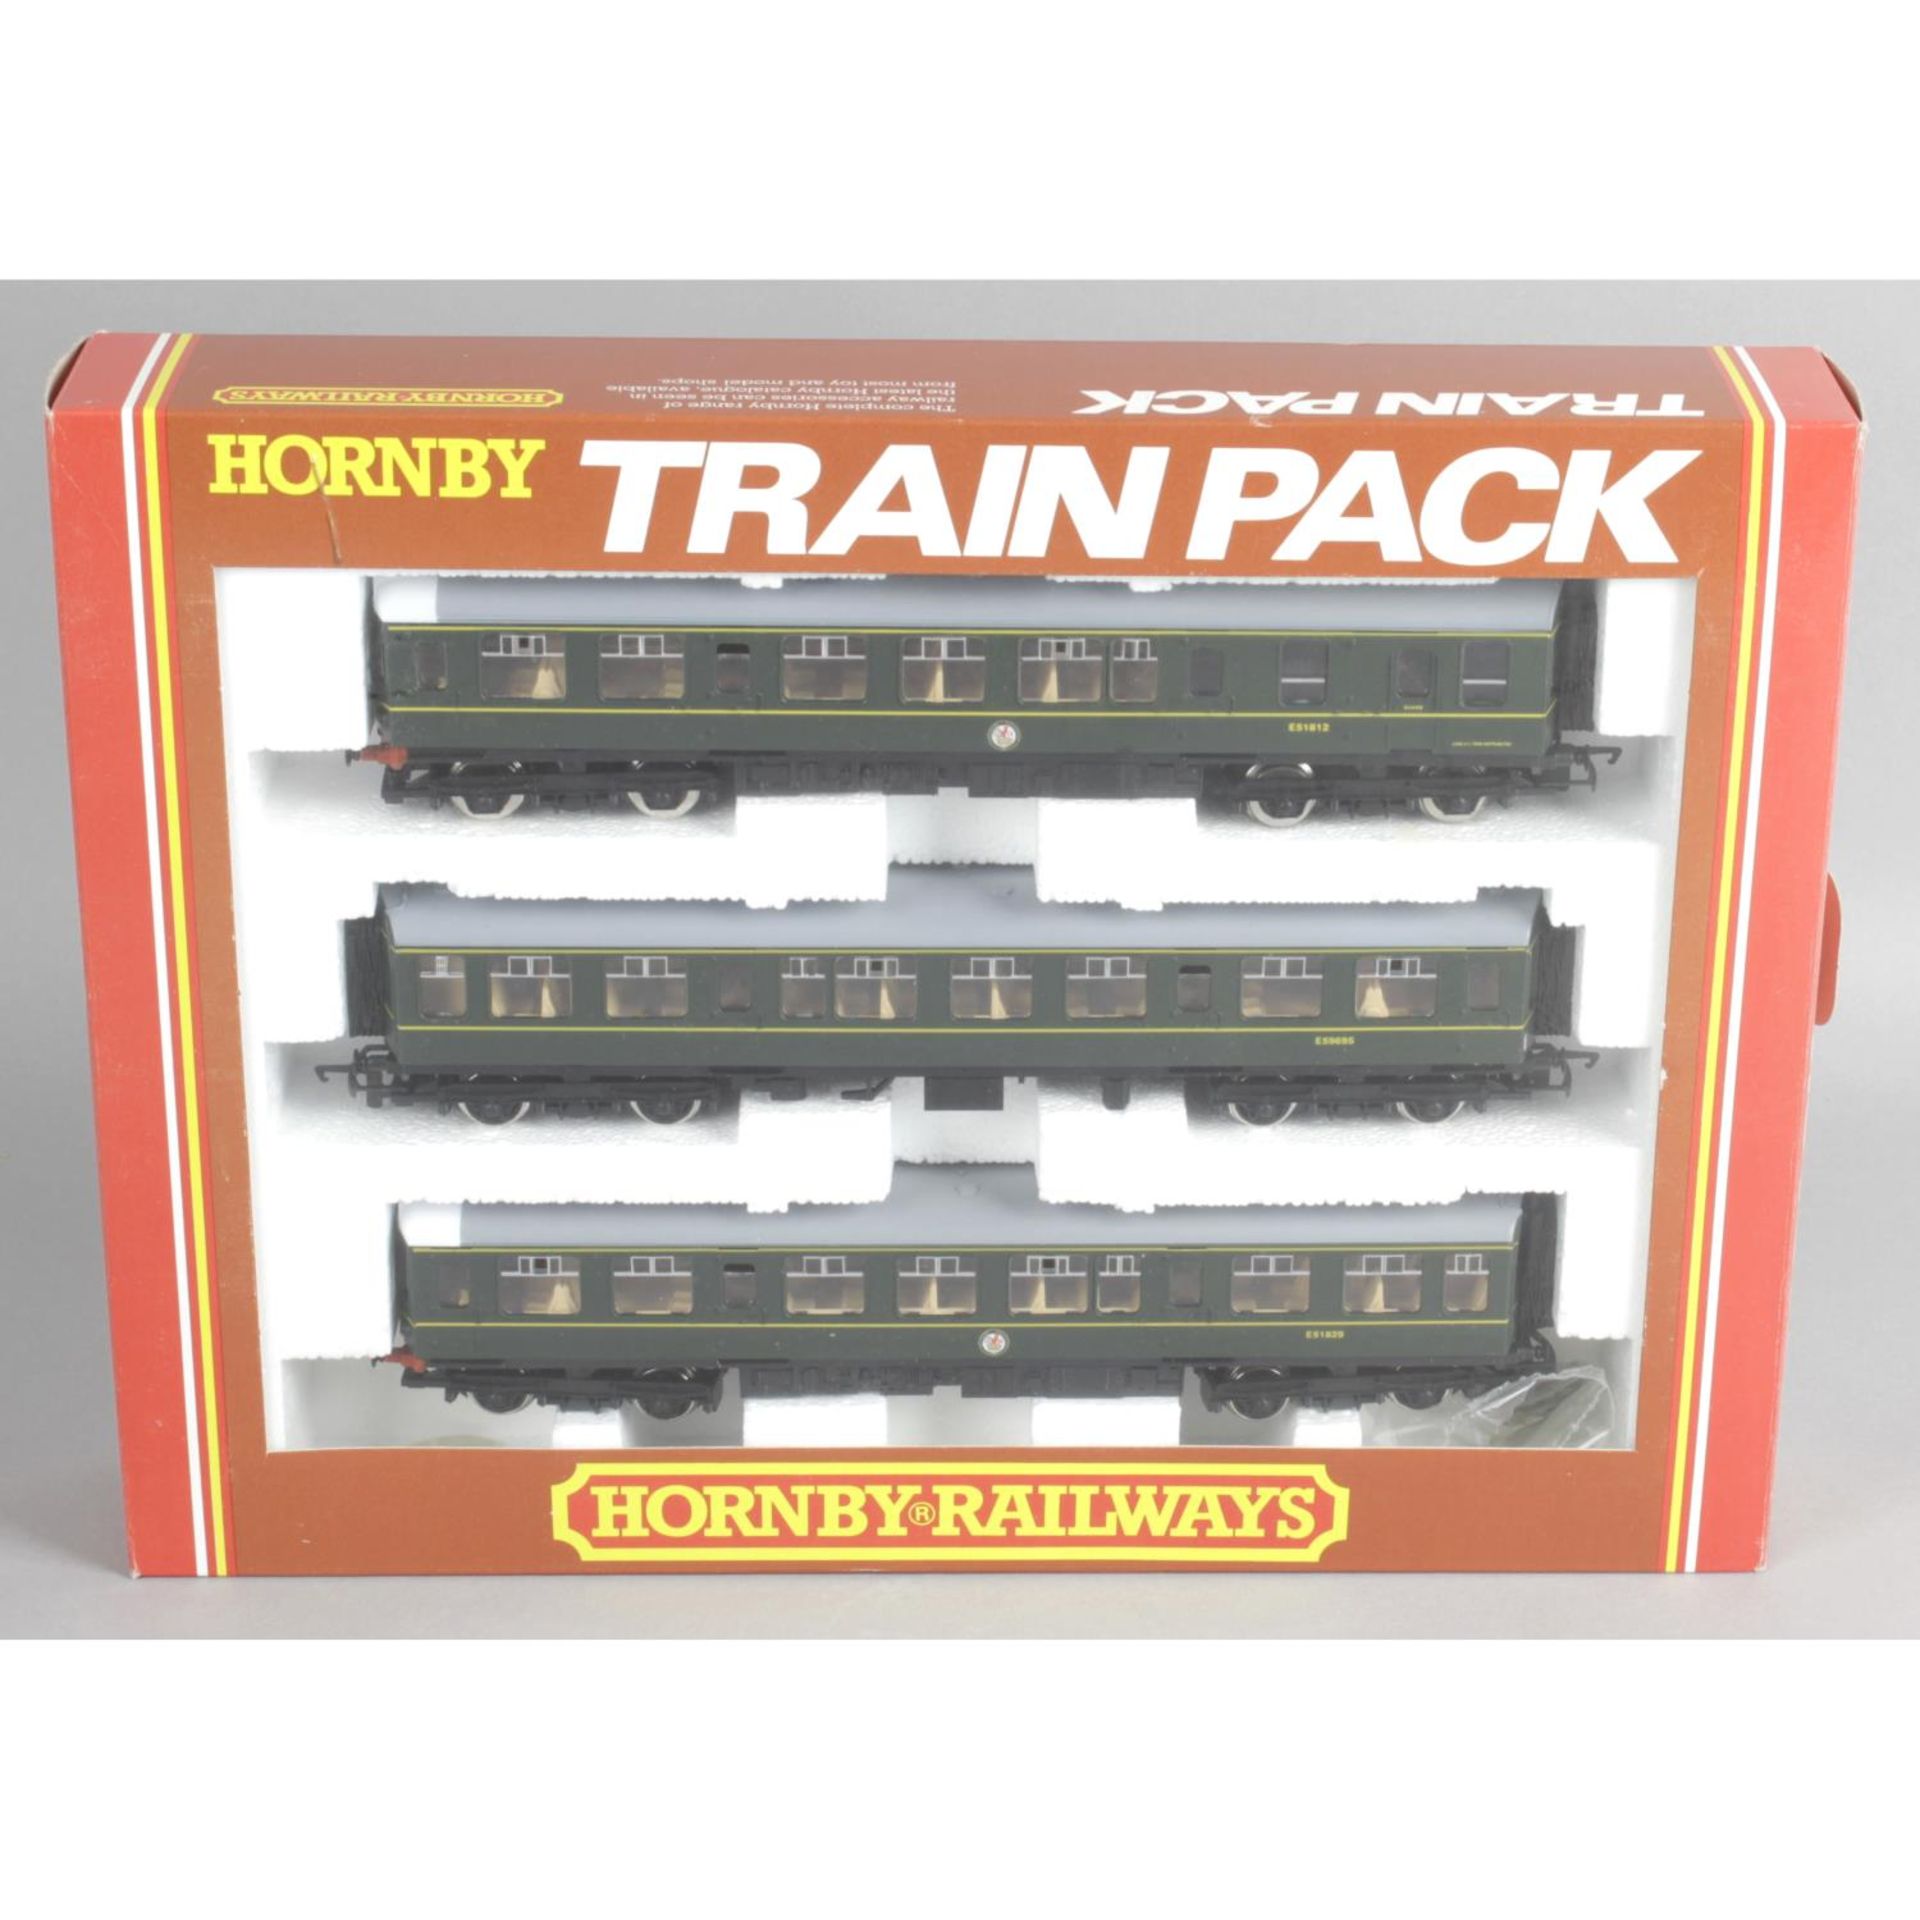 Eight Hornby 00 gauge model railway locomotives and trains,